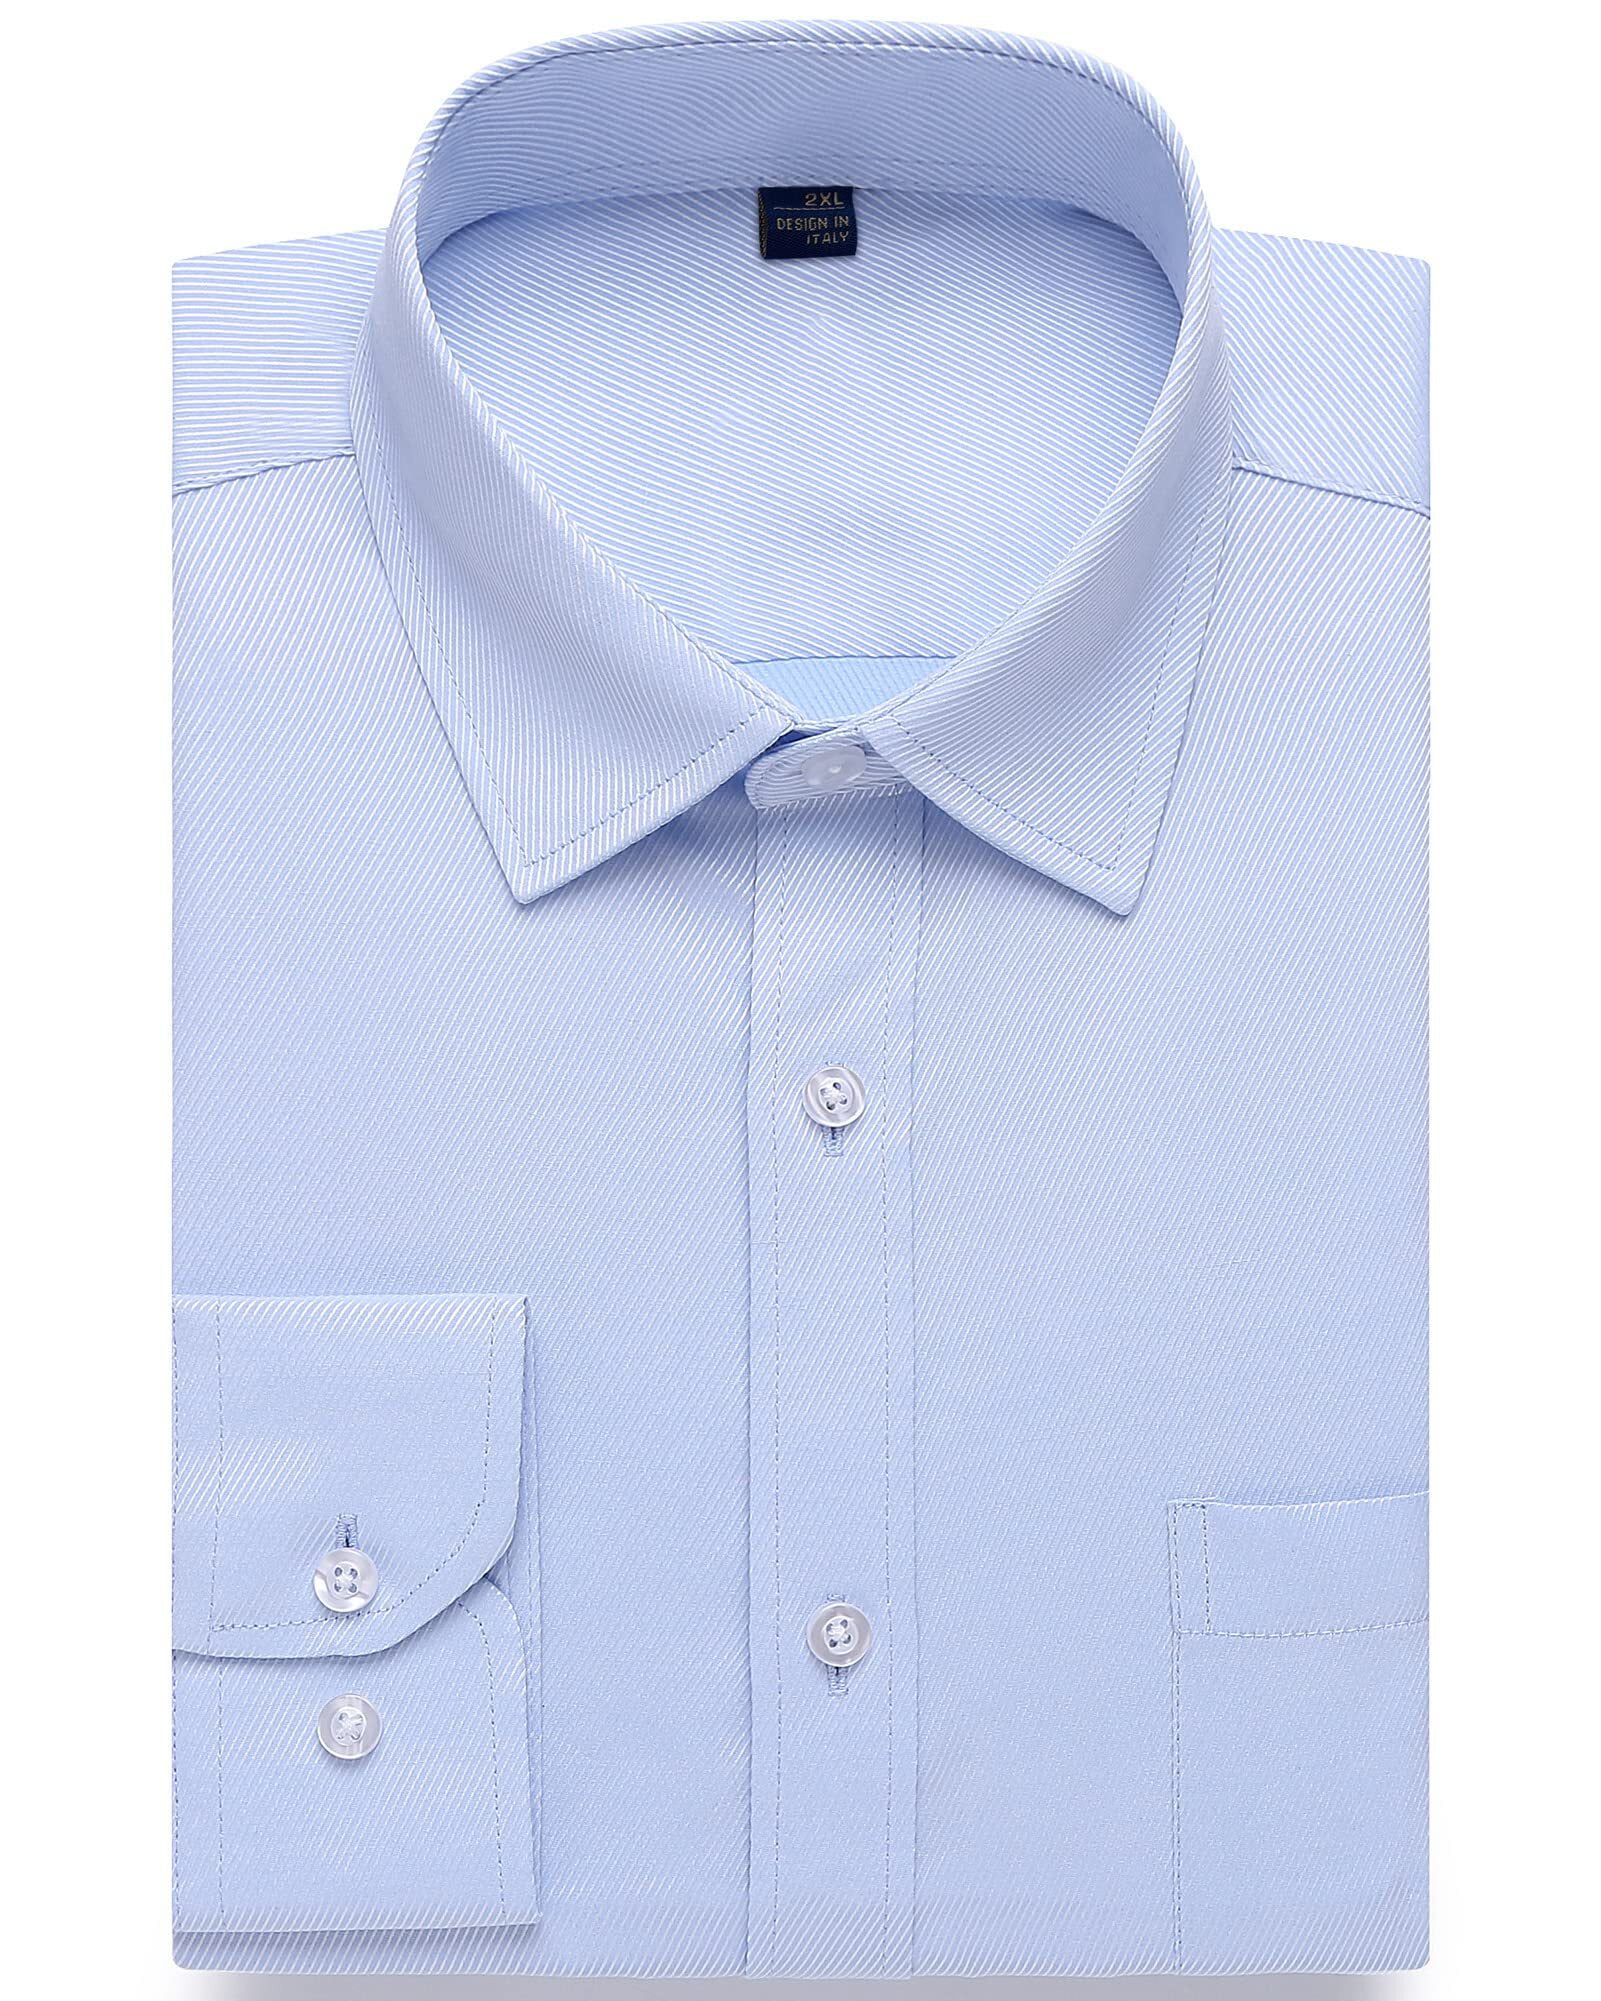 Alimens & Gentle Men's Long Sleeve Business Shirts Solid Basic Shirt ...